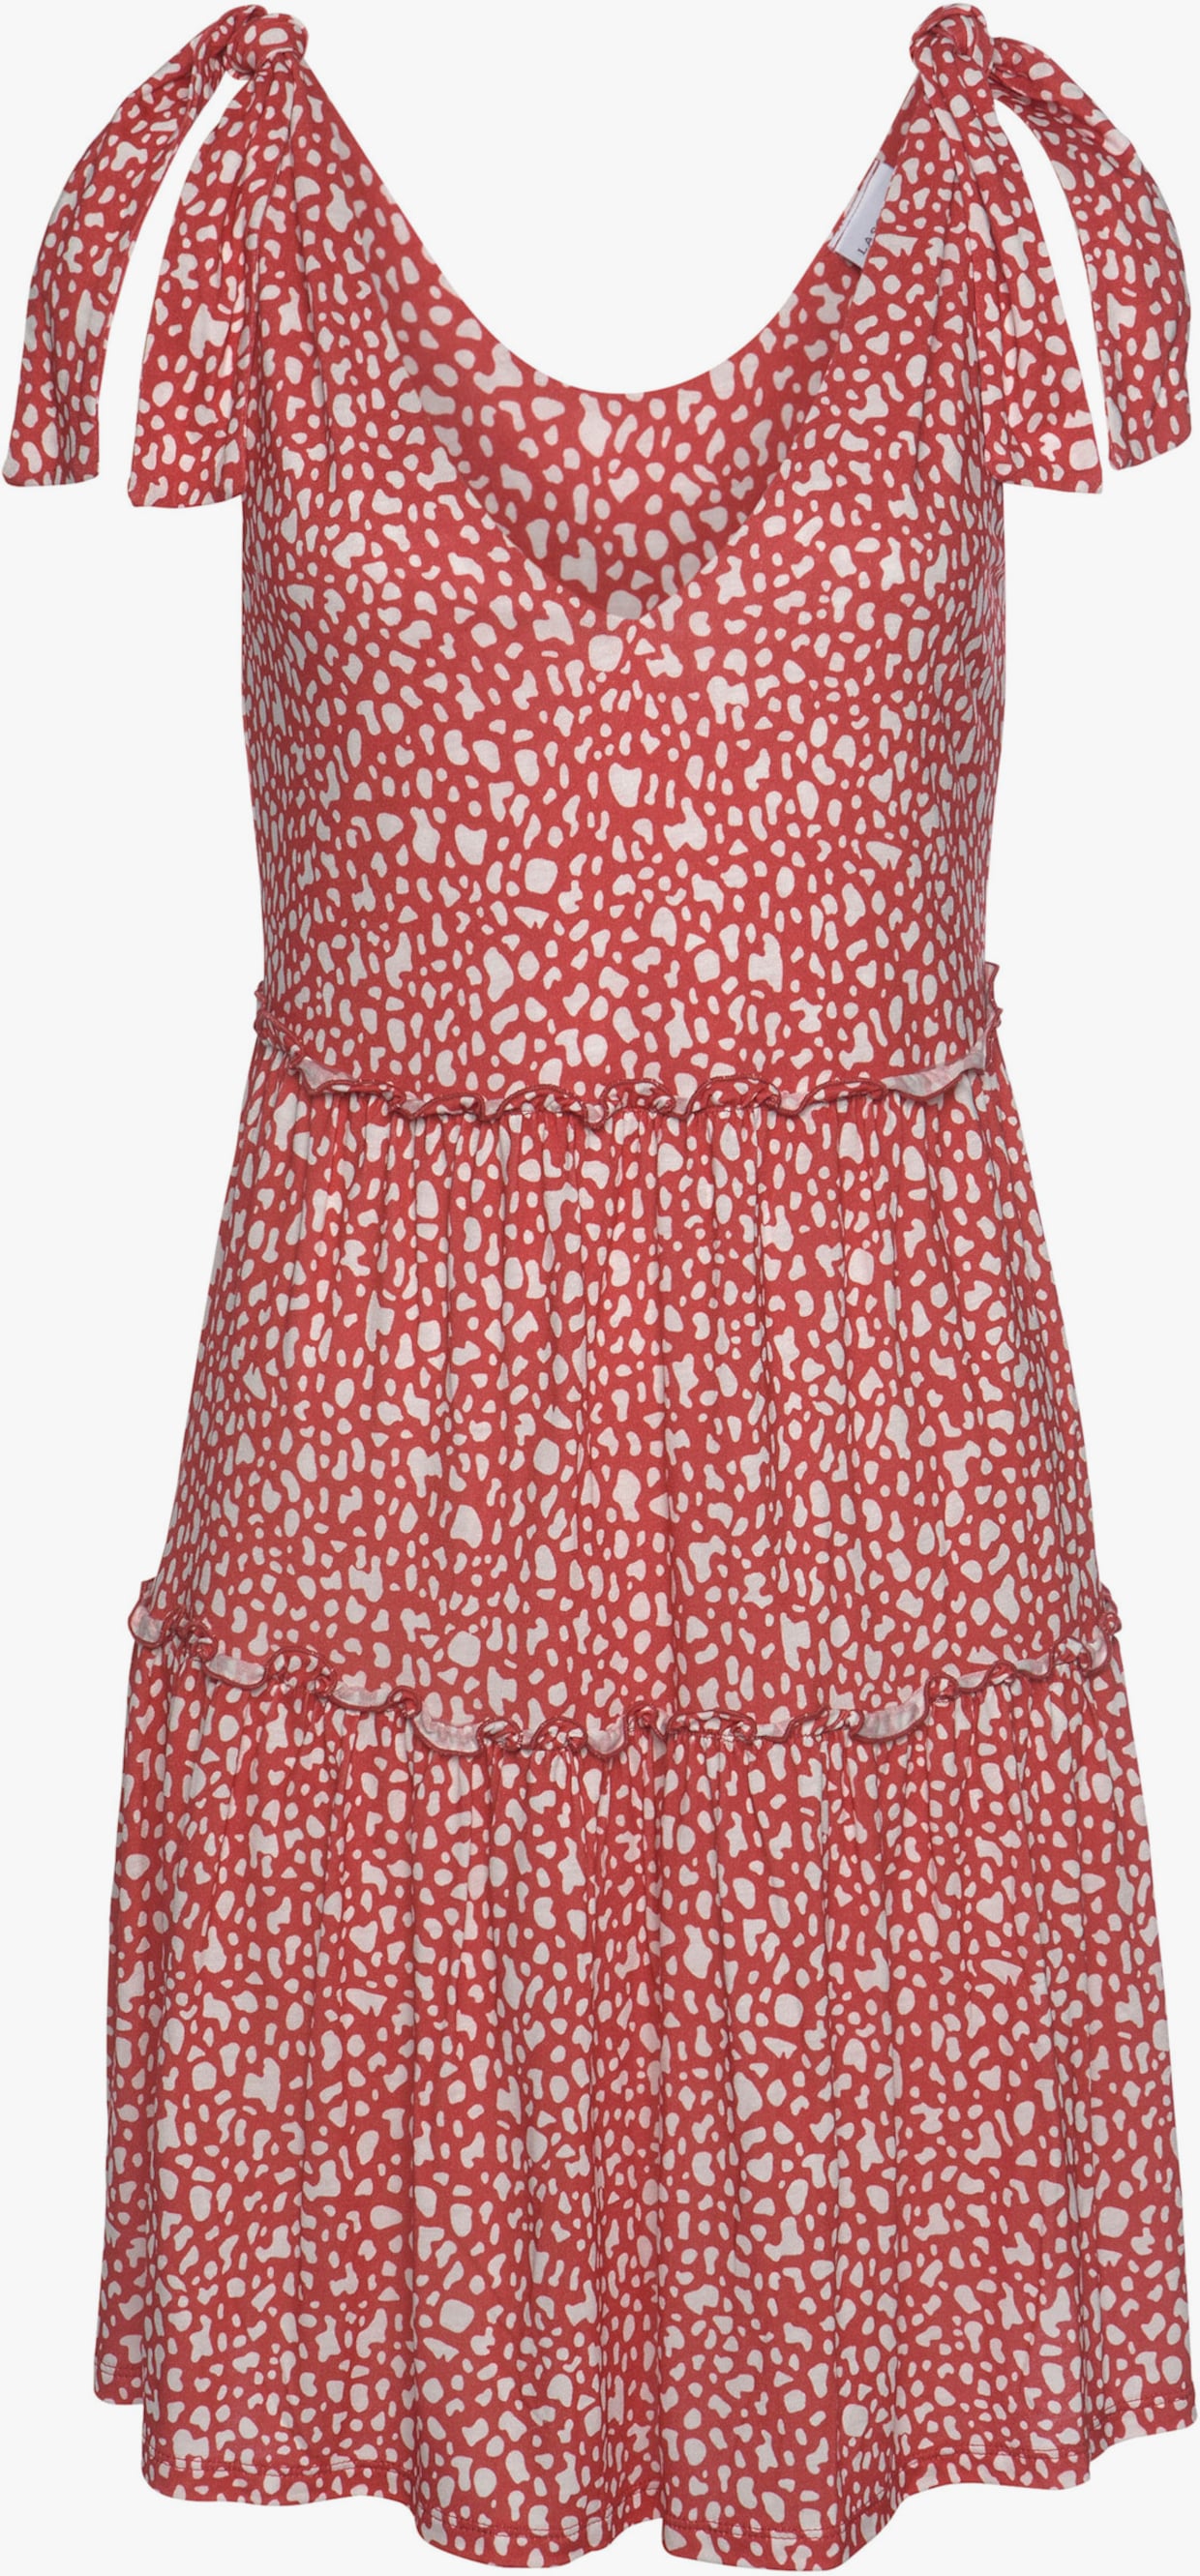 Beachtime Bedrukte jurk - rood/wit geprint